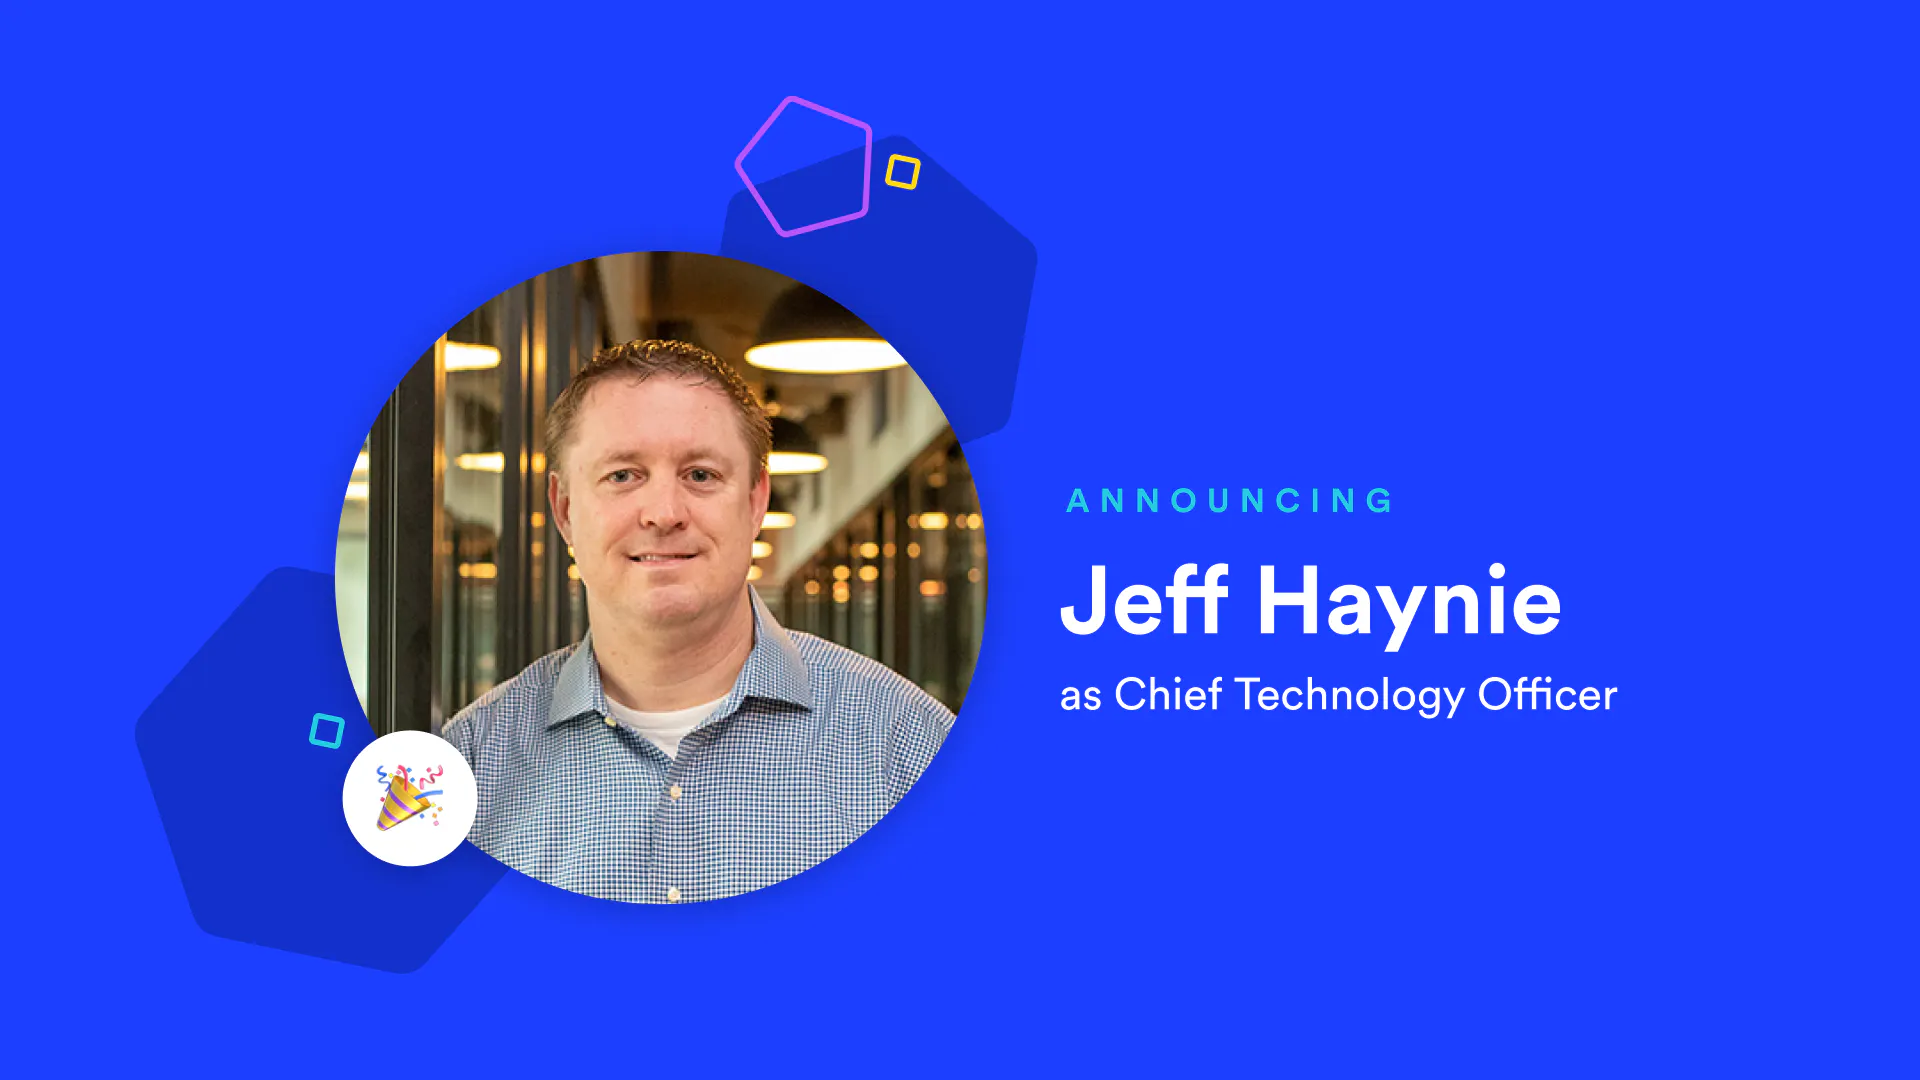 Jeff Haynie, Chief Technology Officer